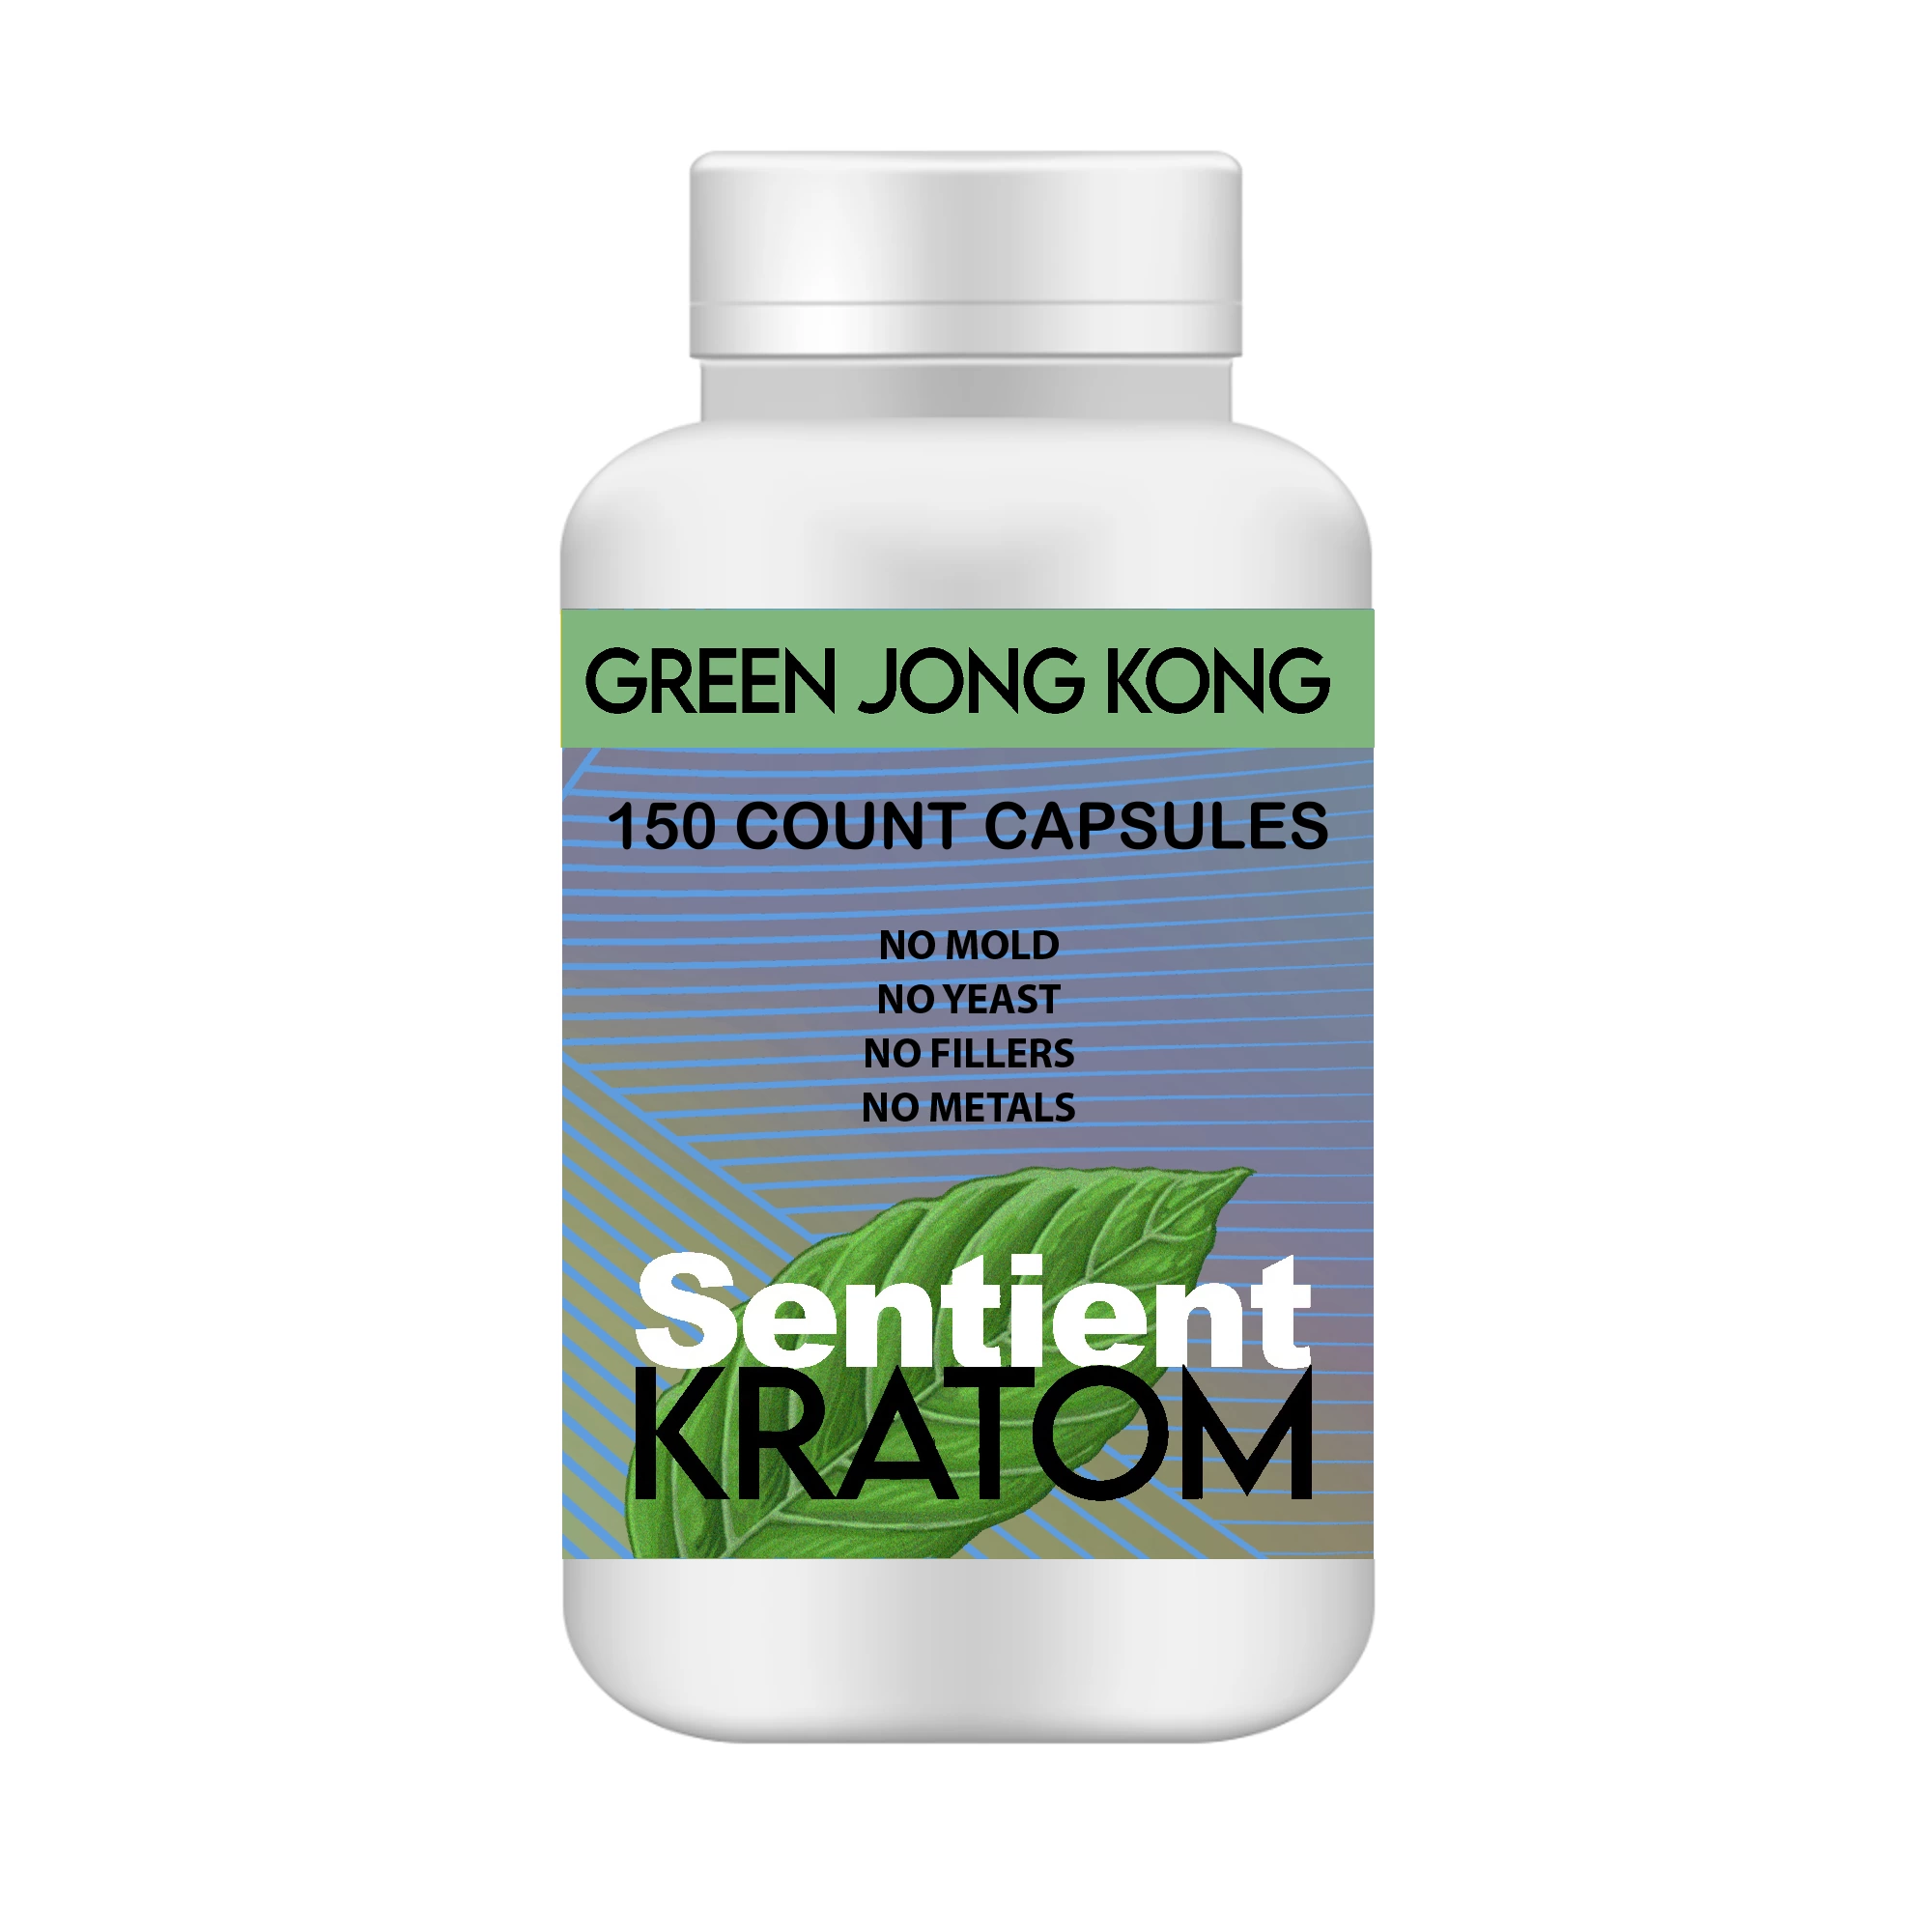 Green Jong Kong Kratom 150ct caps